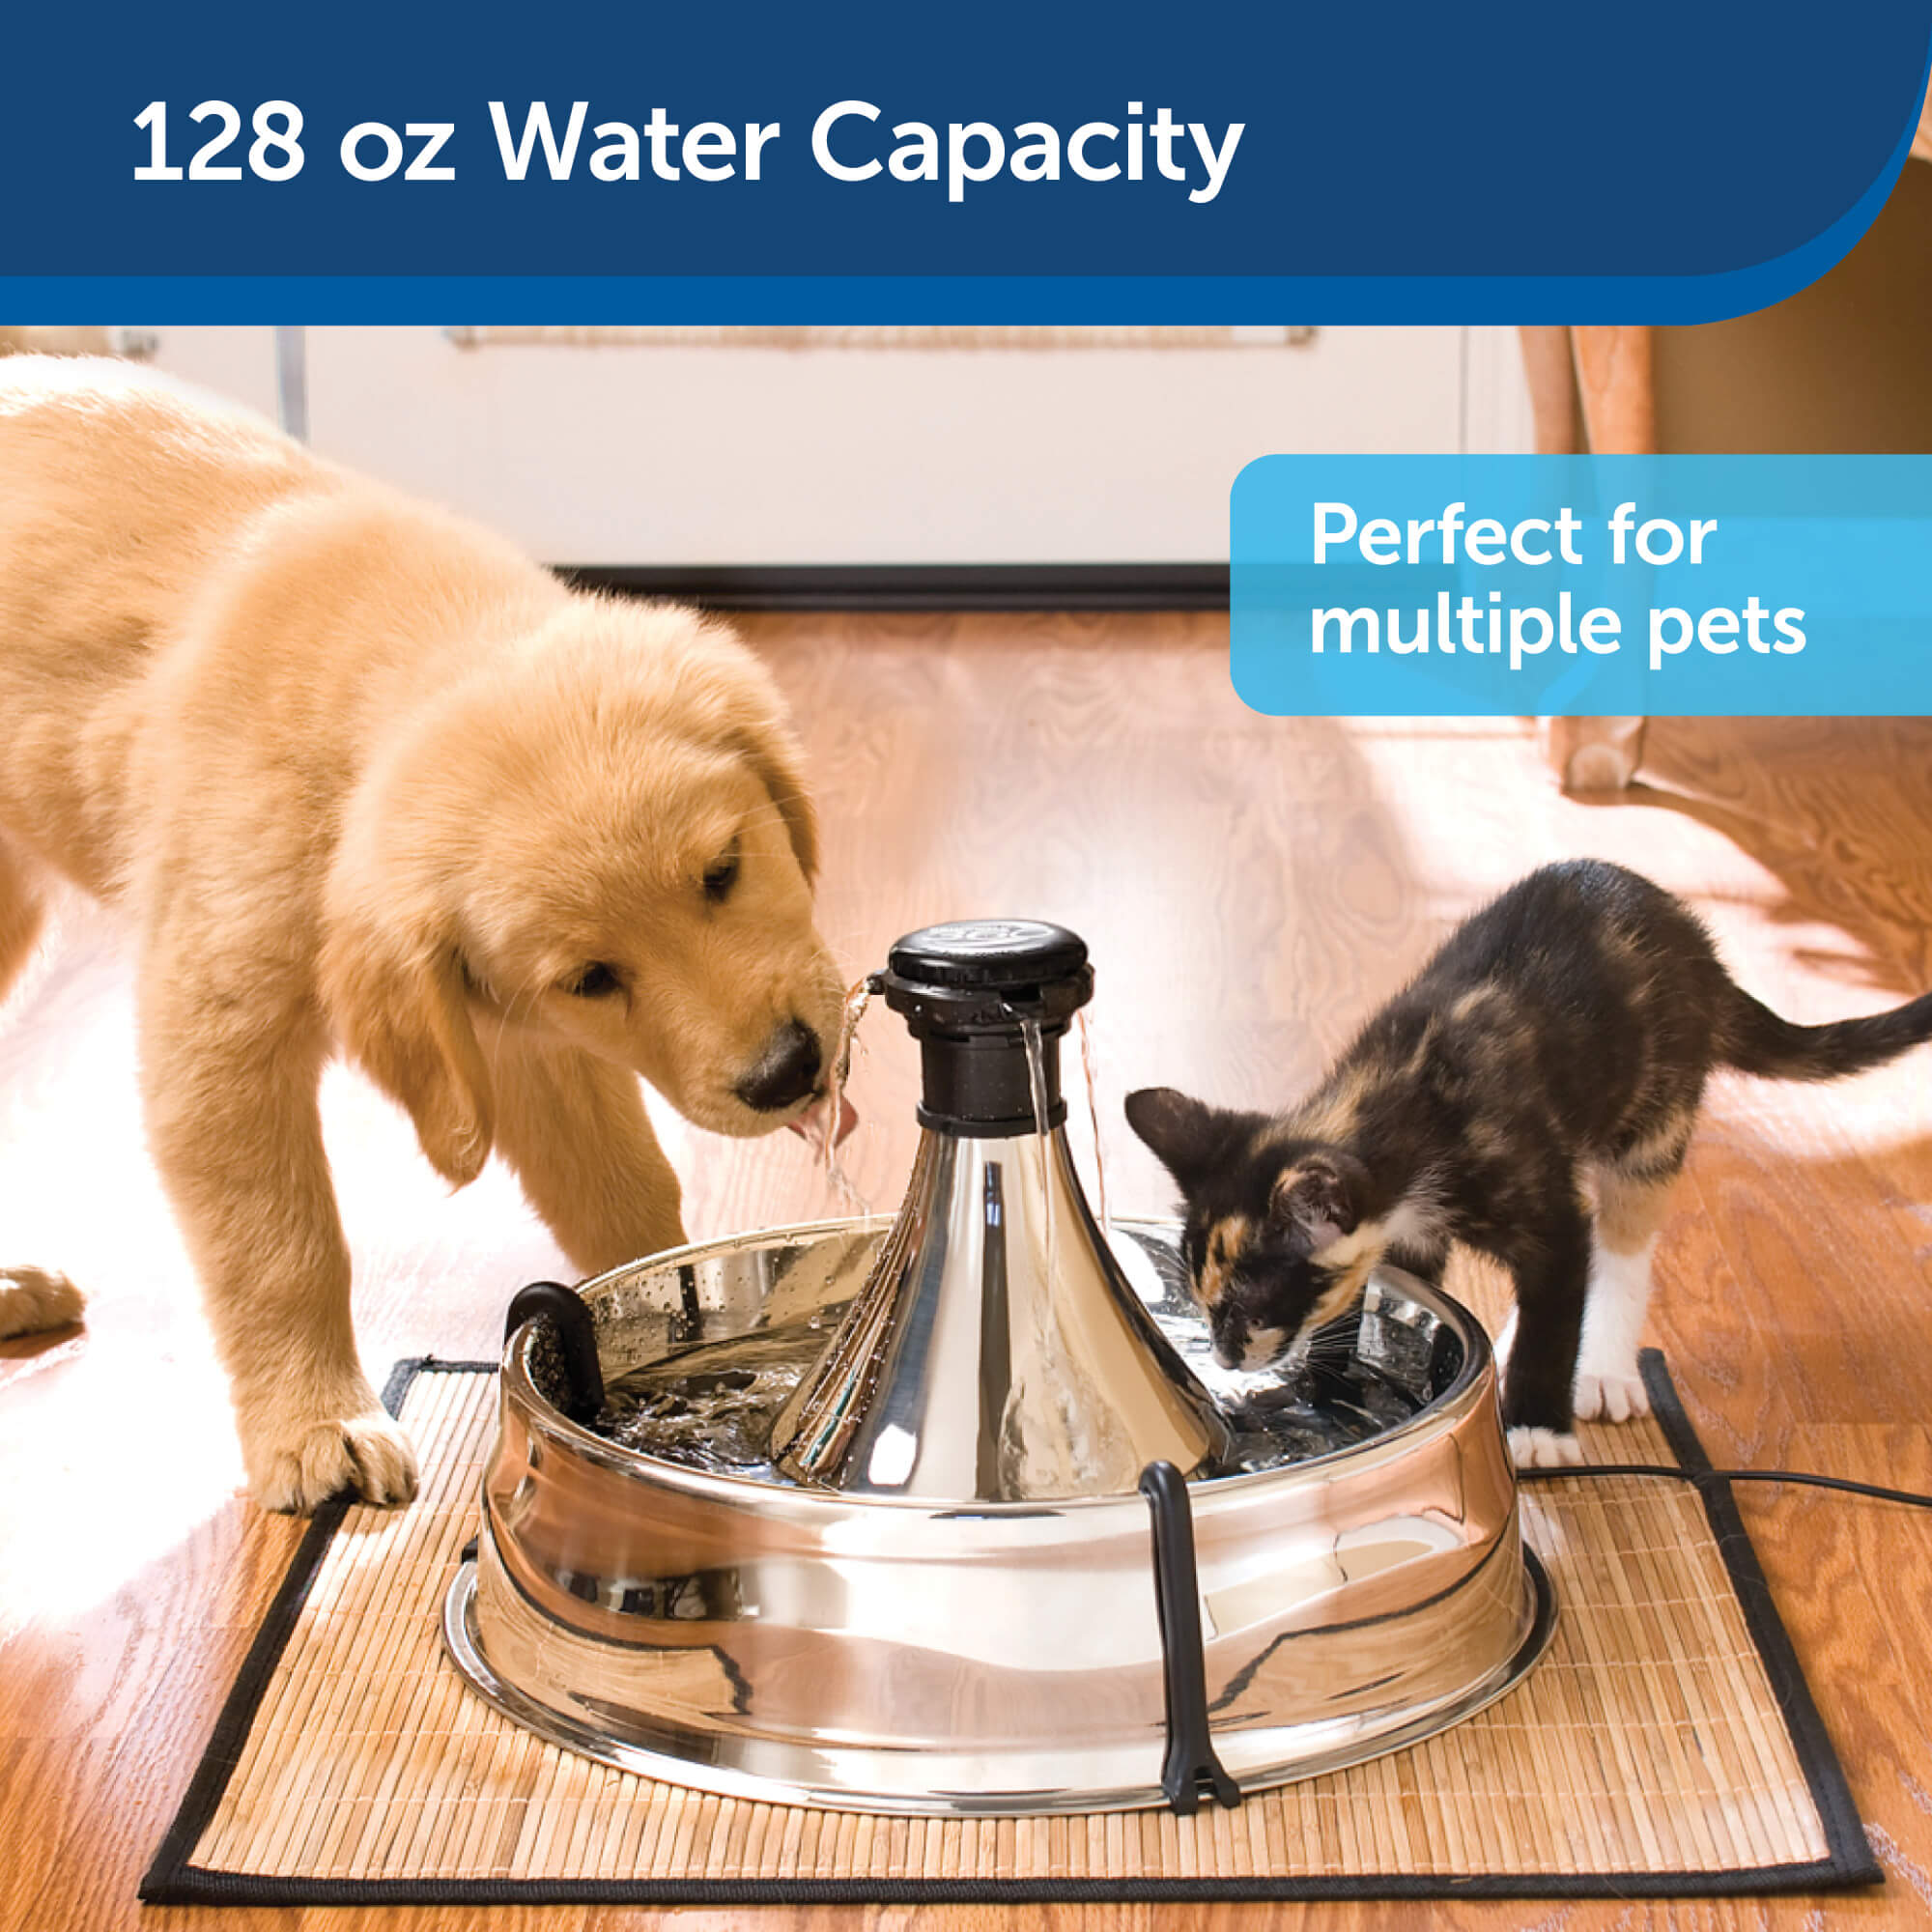 128 oz water capacity